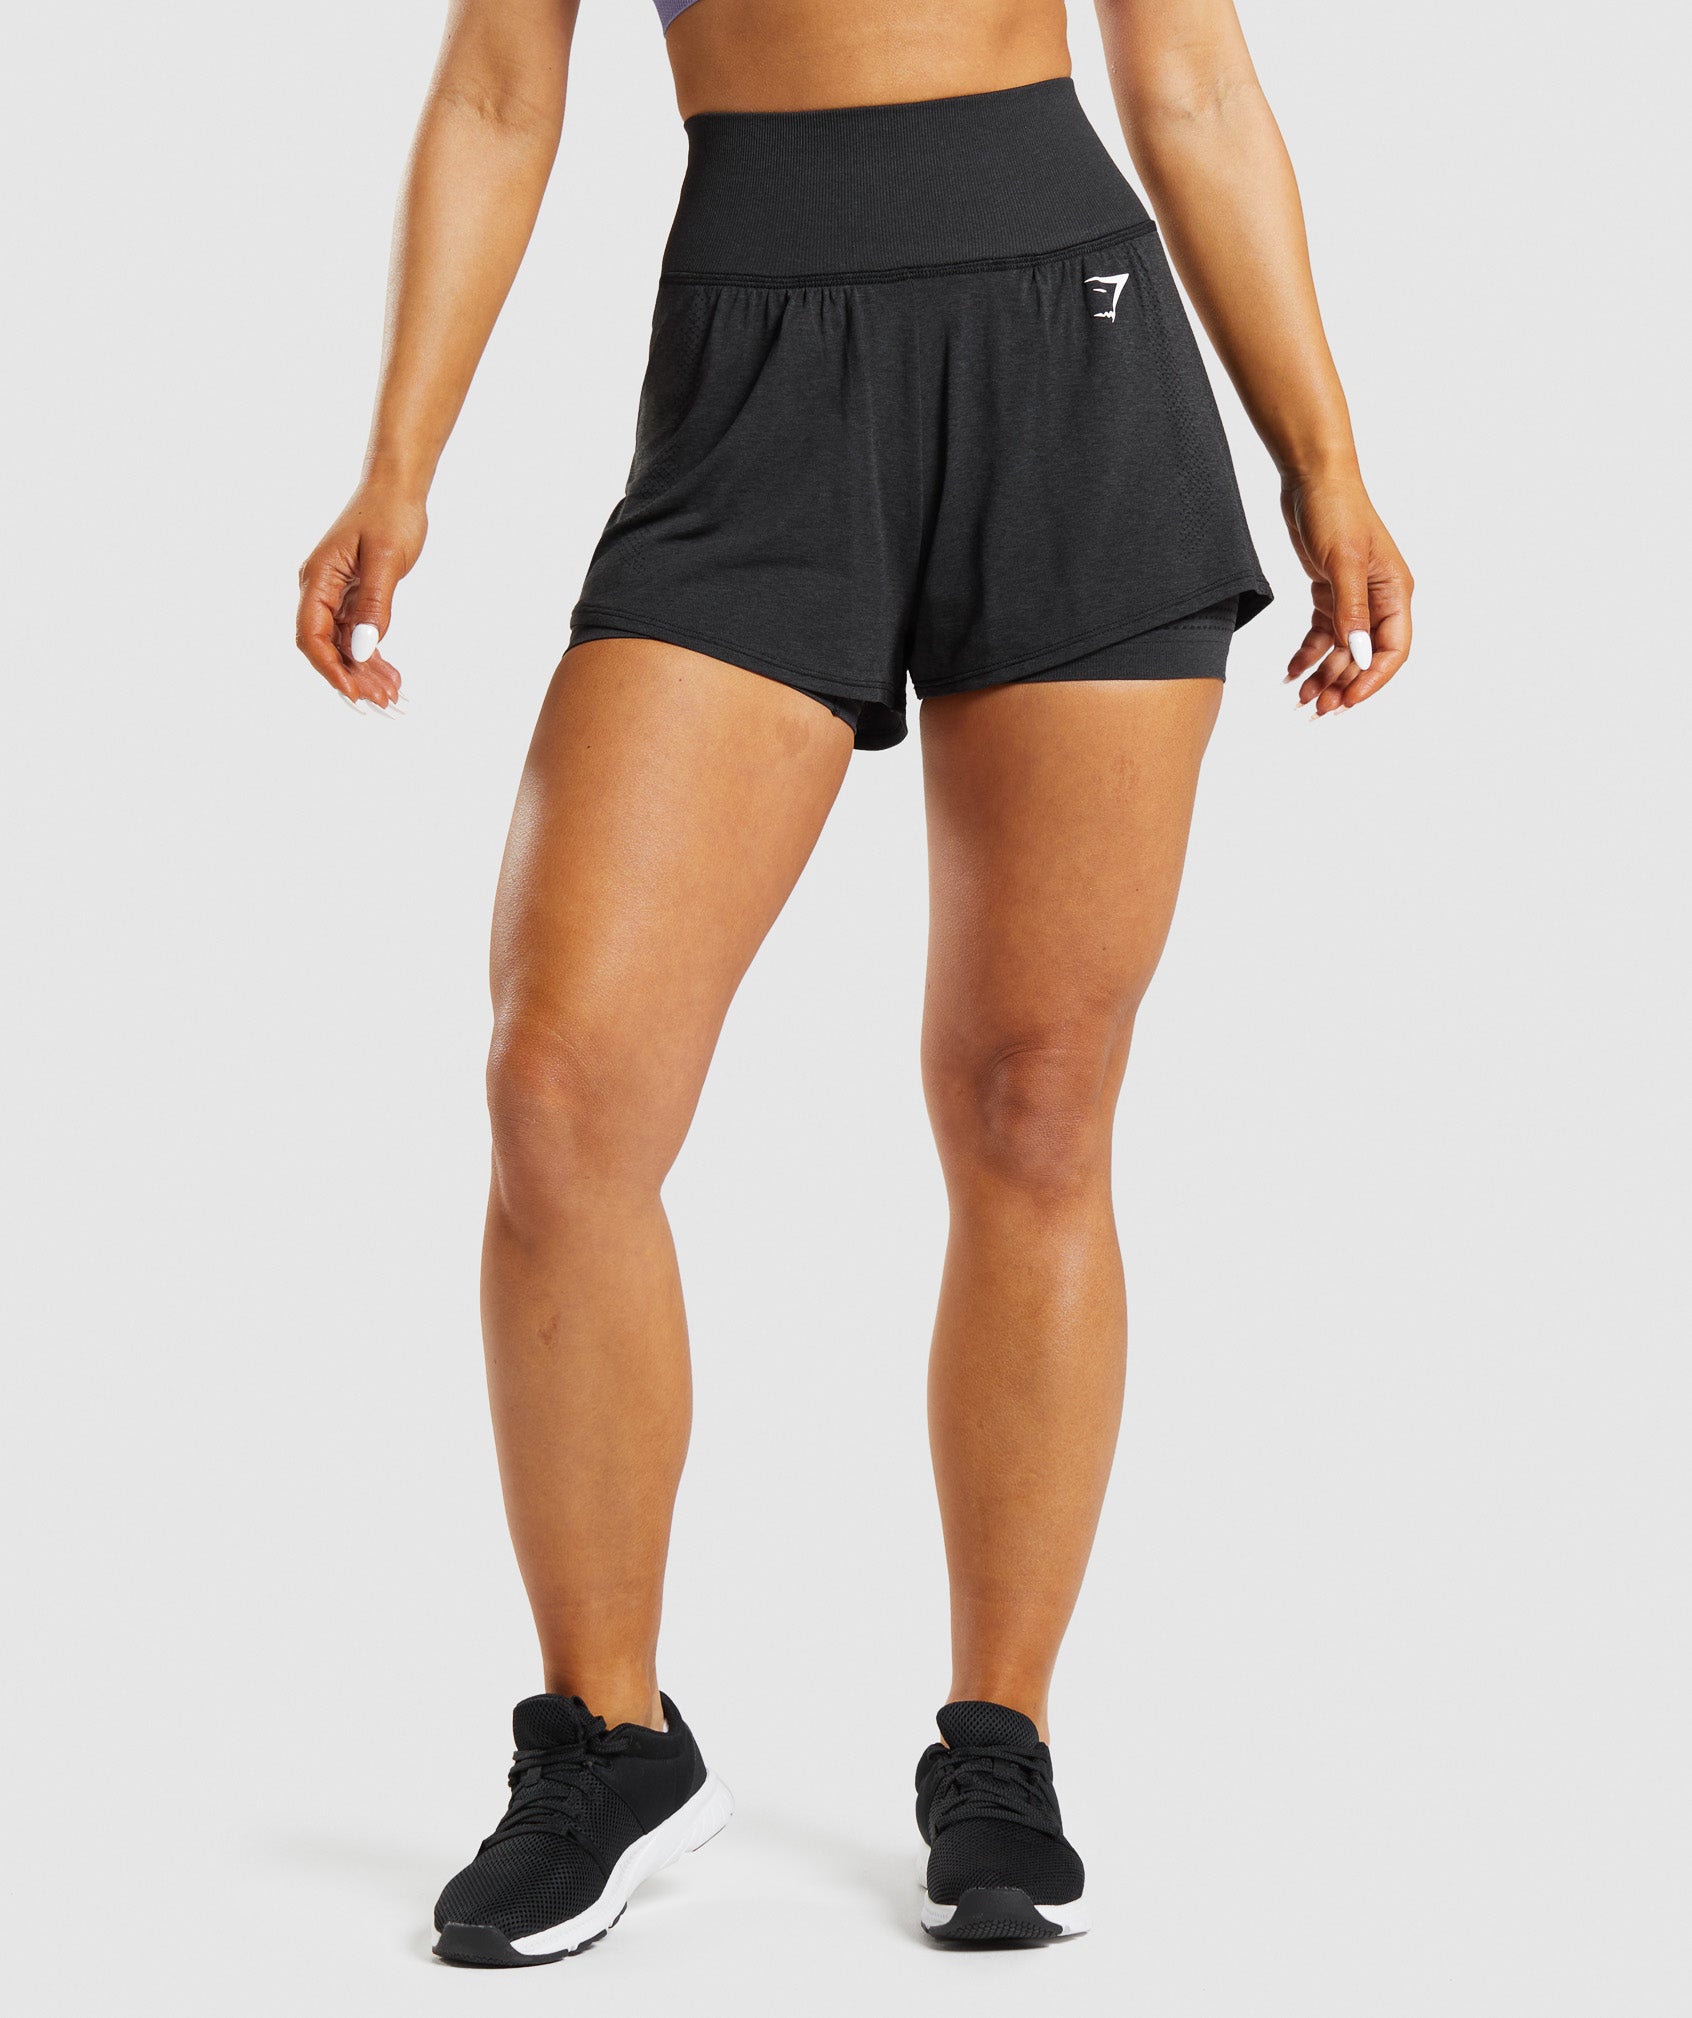 Gymshark Speed Shorts Black Women's medium